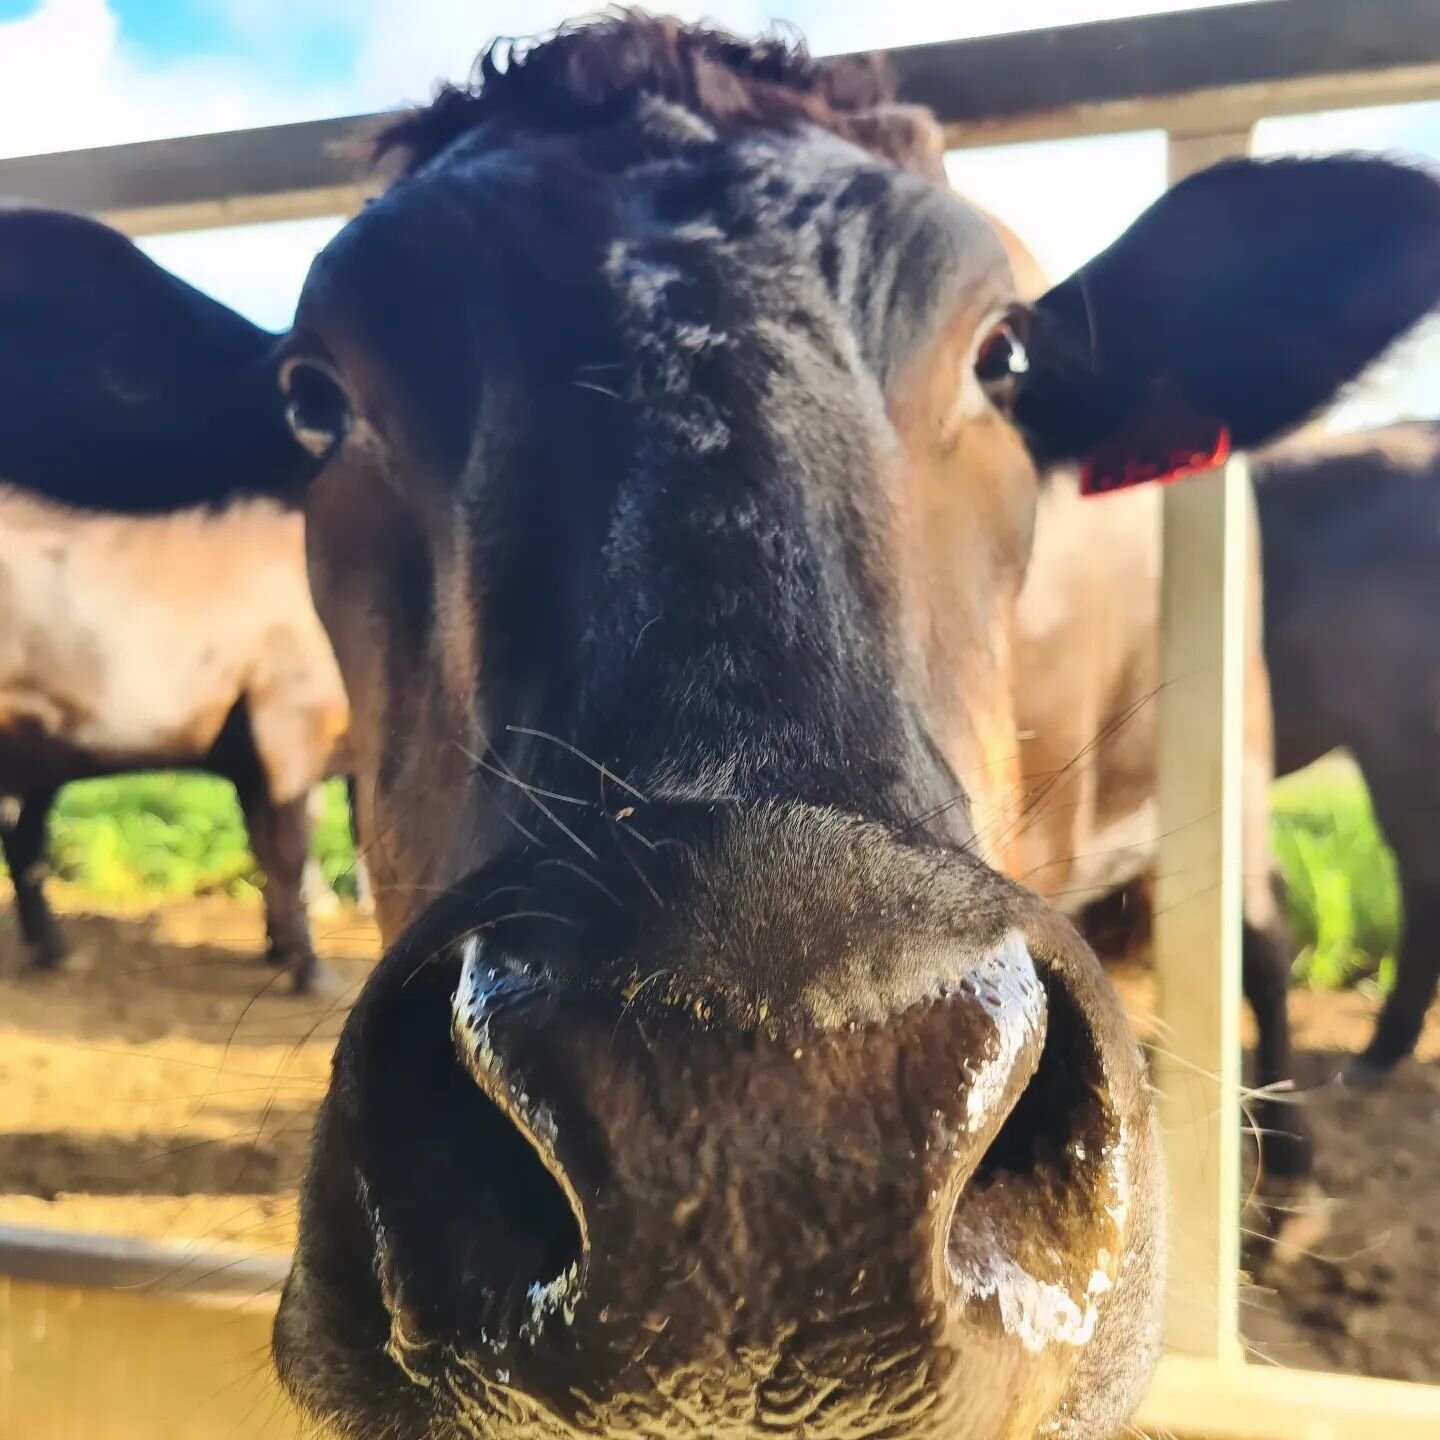 Smile! This Curious Cow interrupted her morning muesli breaky behind The Artisan Farmer for her 'selfie'! ❤️ 

#wagyucattle #wagyu #morning #curiouscows #animalselfie #theartisanfarmernabiac #nabiac #barringtoncoast #midnorthcoastnsw